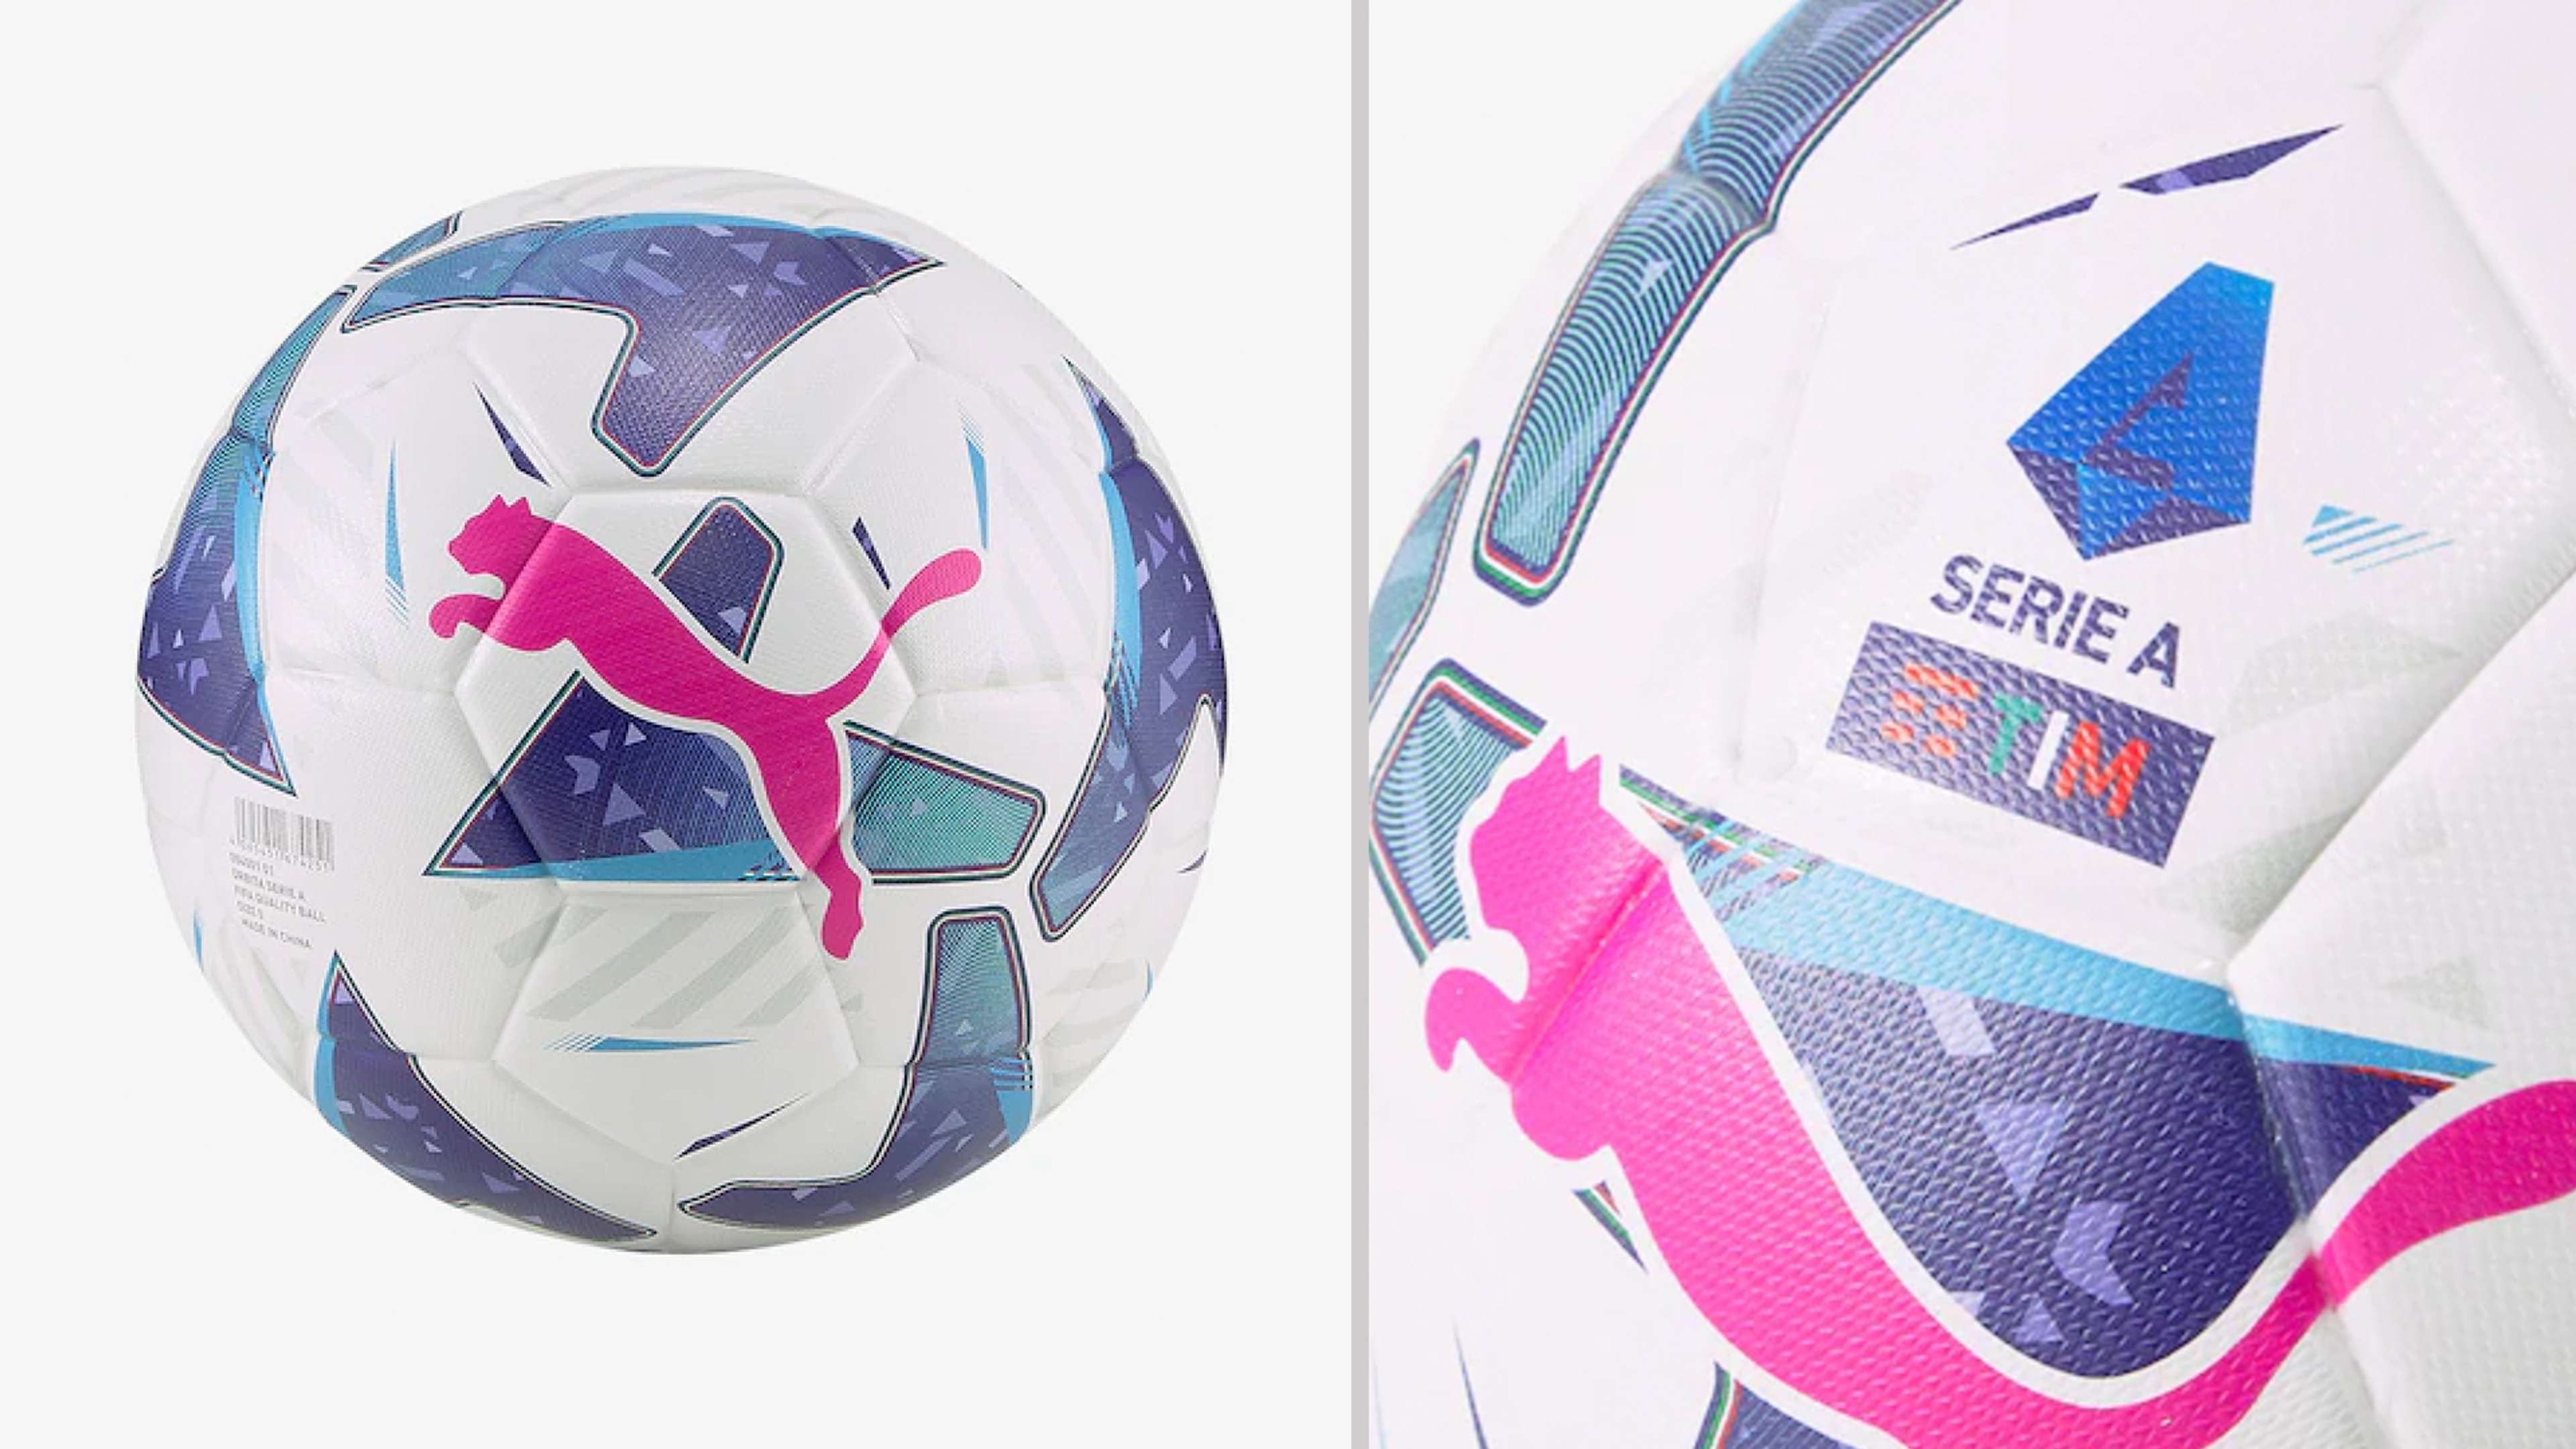 Puma Orbita Serie A ball (FIFA quality)